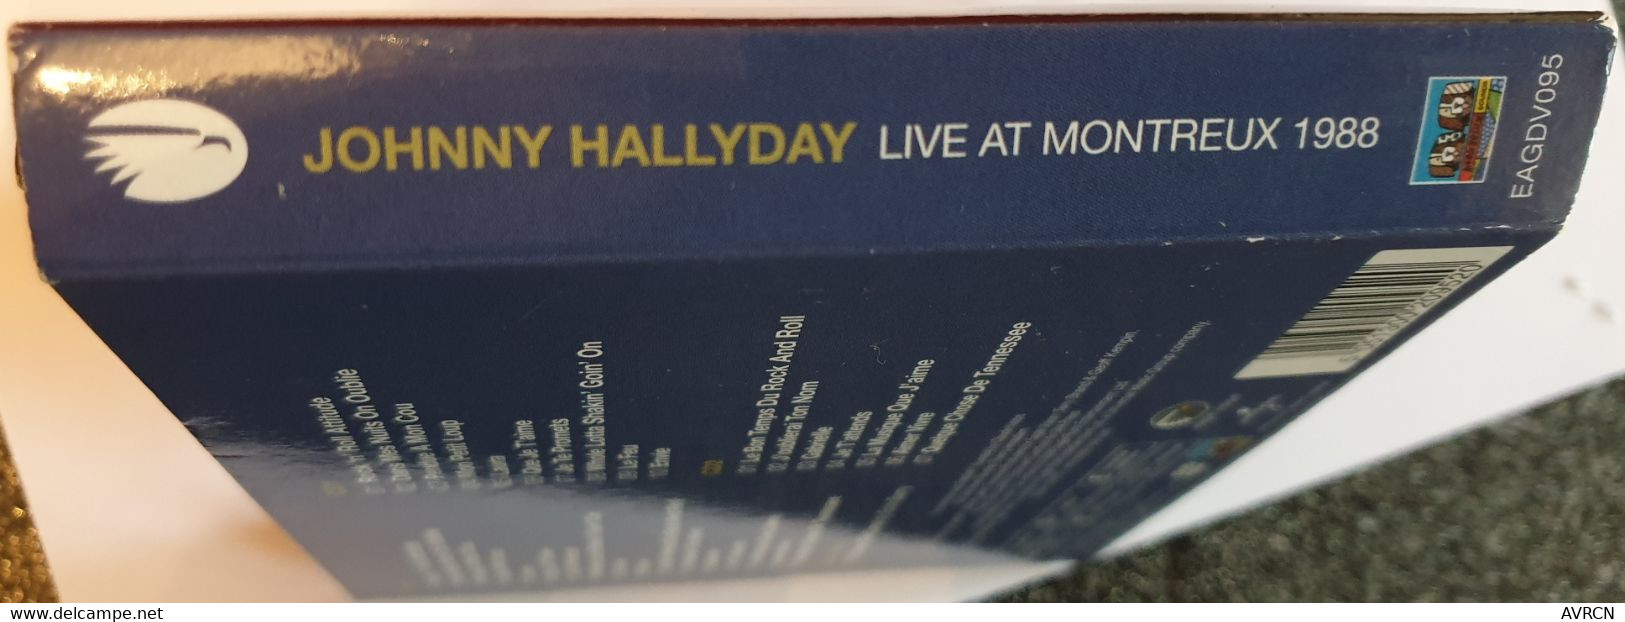 JOHNNY HALLYDAY LIVE AT MONTREUX 1988 . ALBUM DOUBLE CD + 1 DVD..Eagle EAGDV095